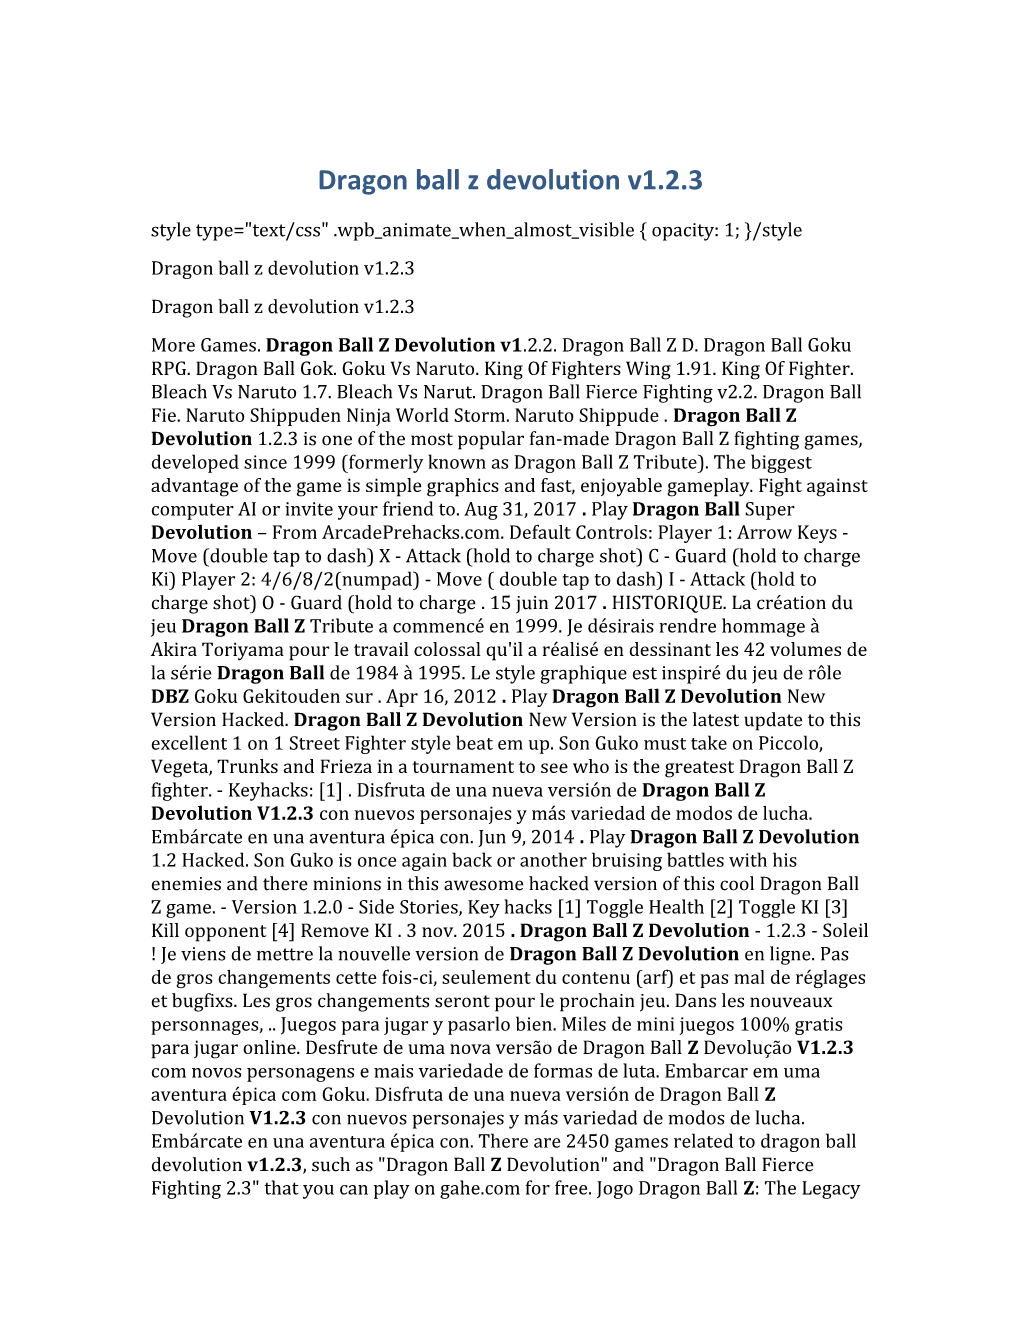 Dragon Ball Z Devolution V1.2.3